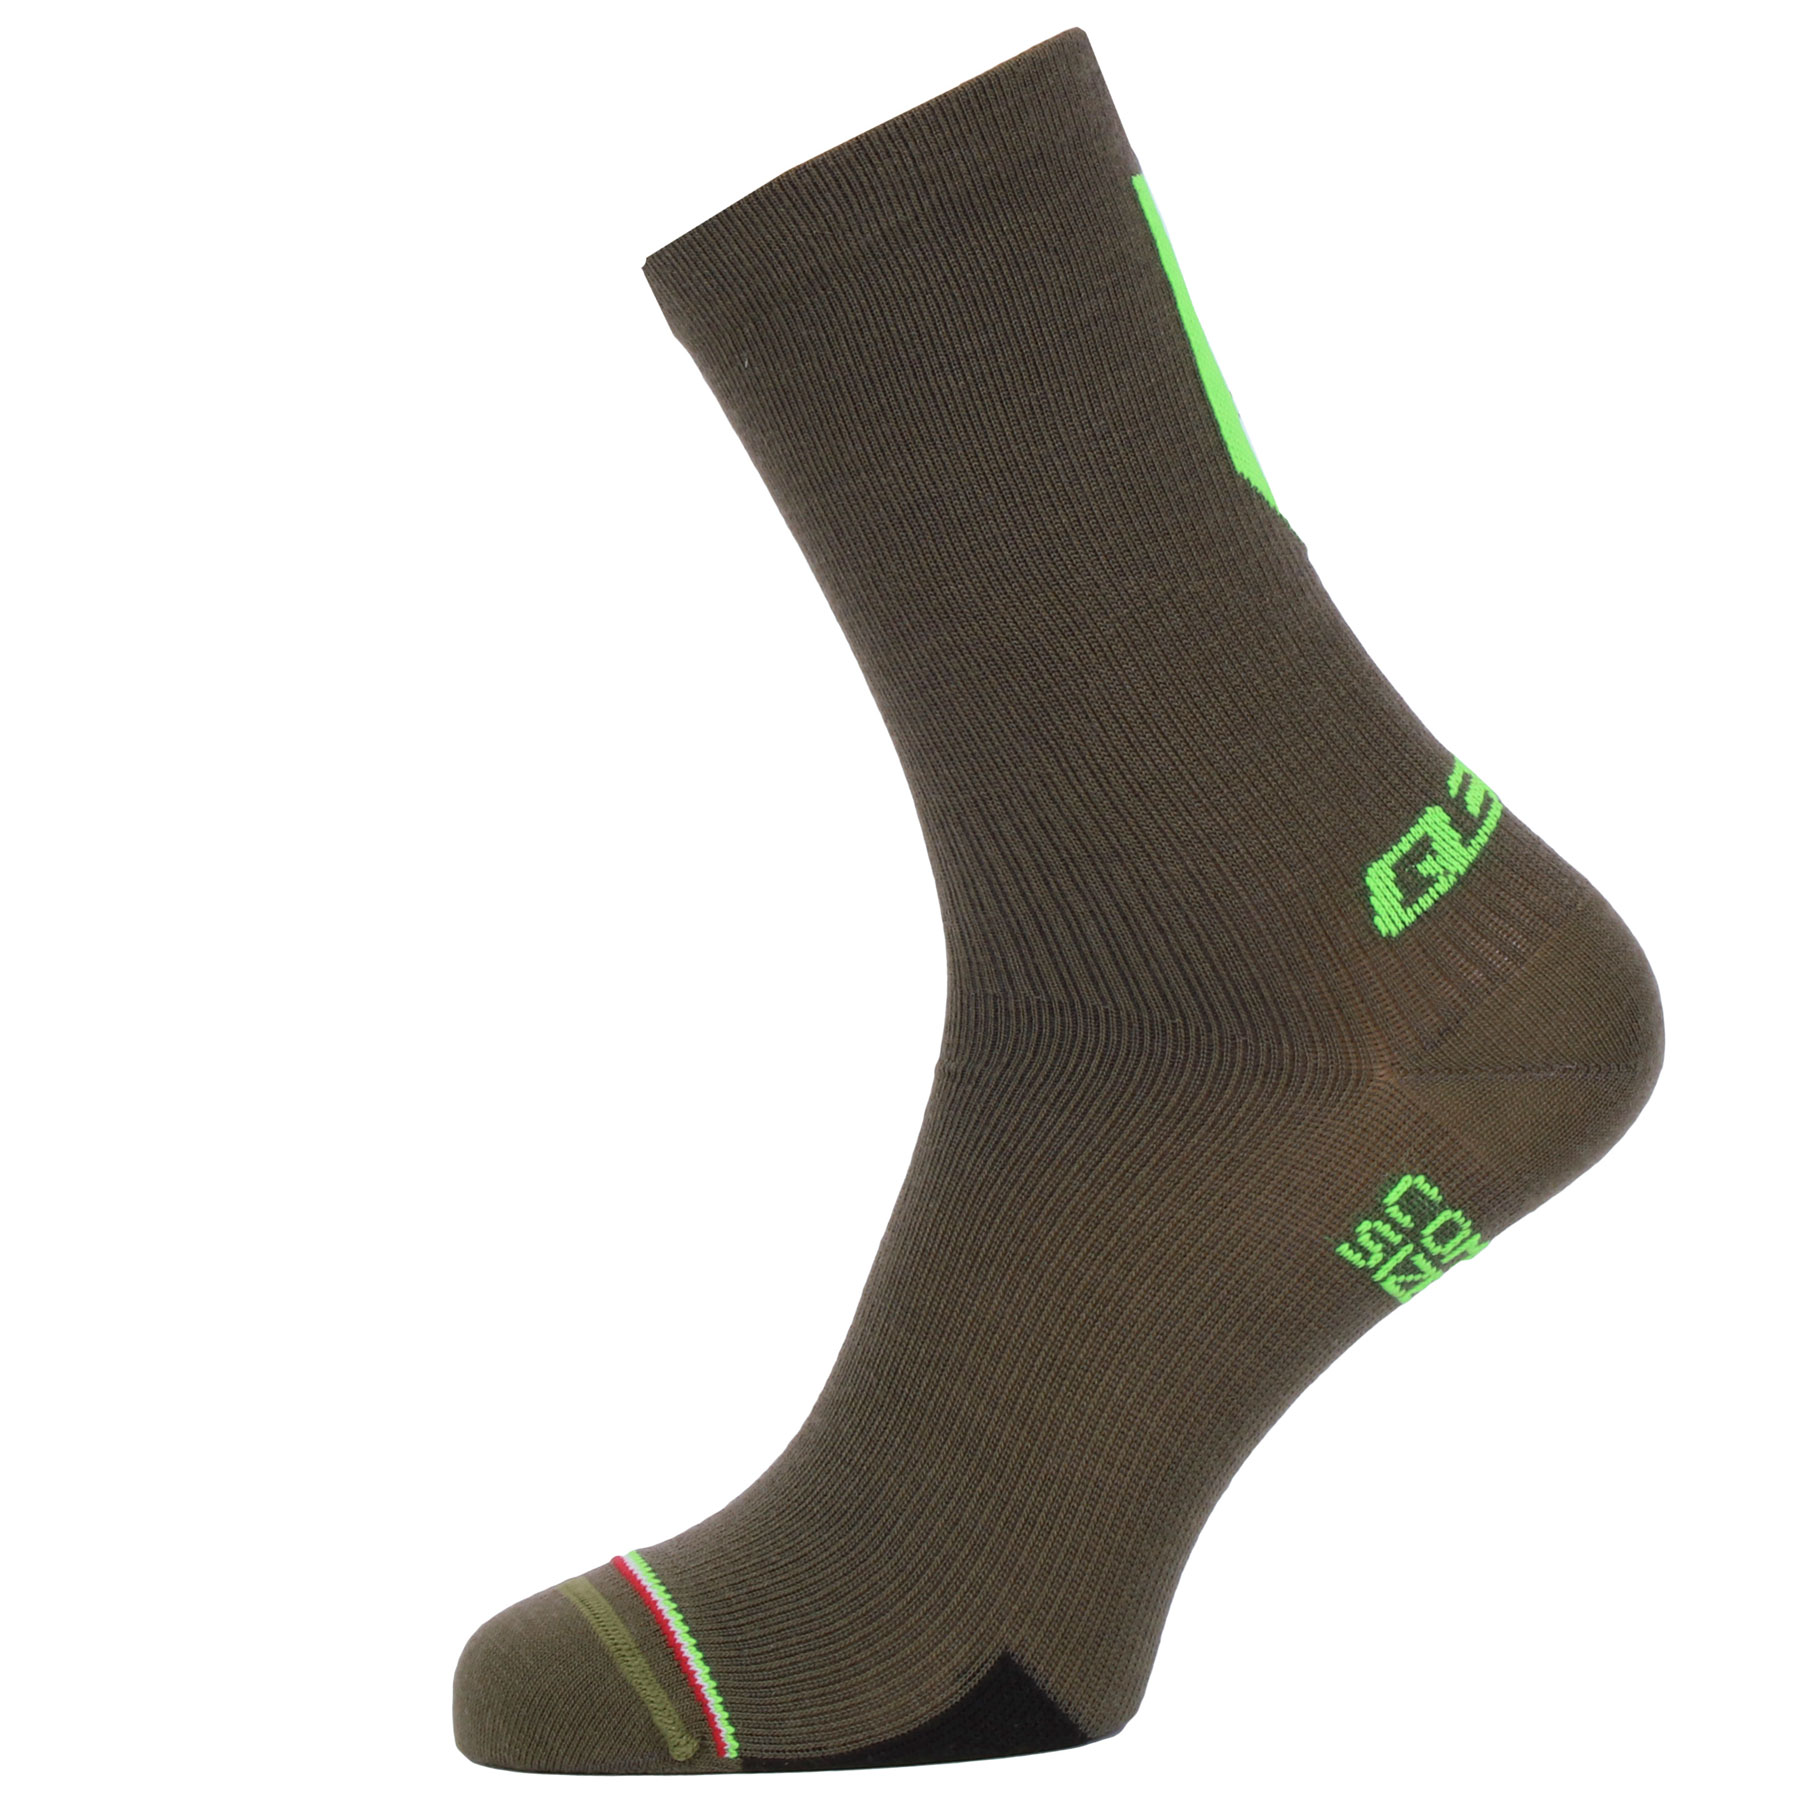 Image of Q36.5 Compression Wool Cycling Socks - olive green